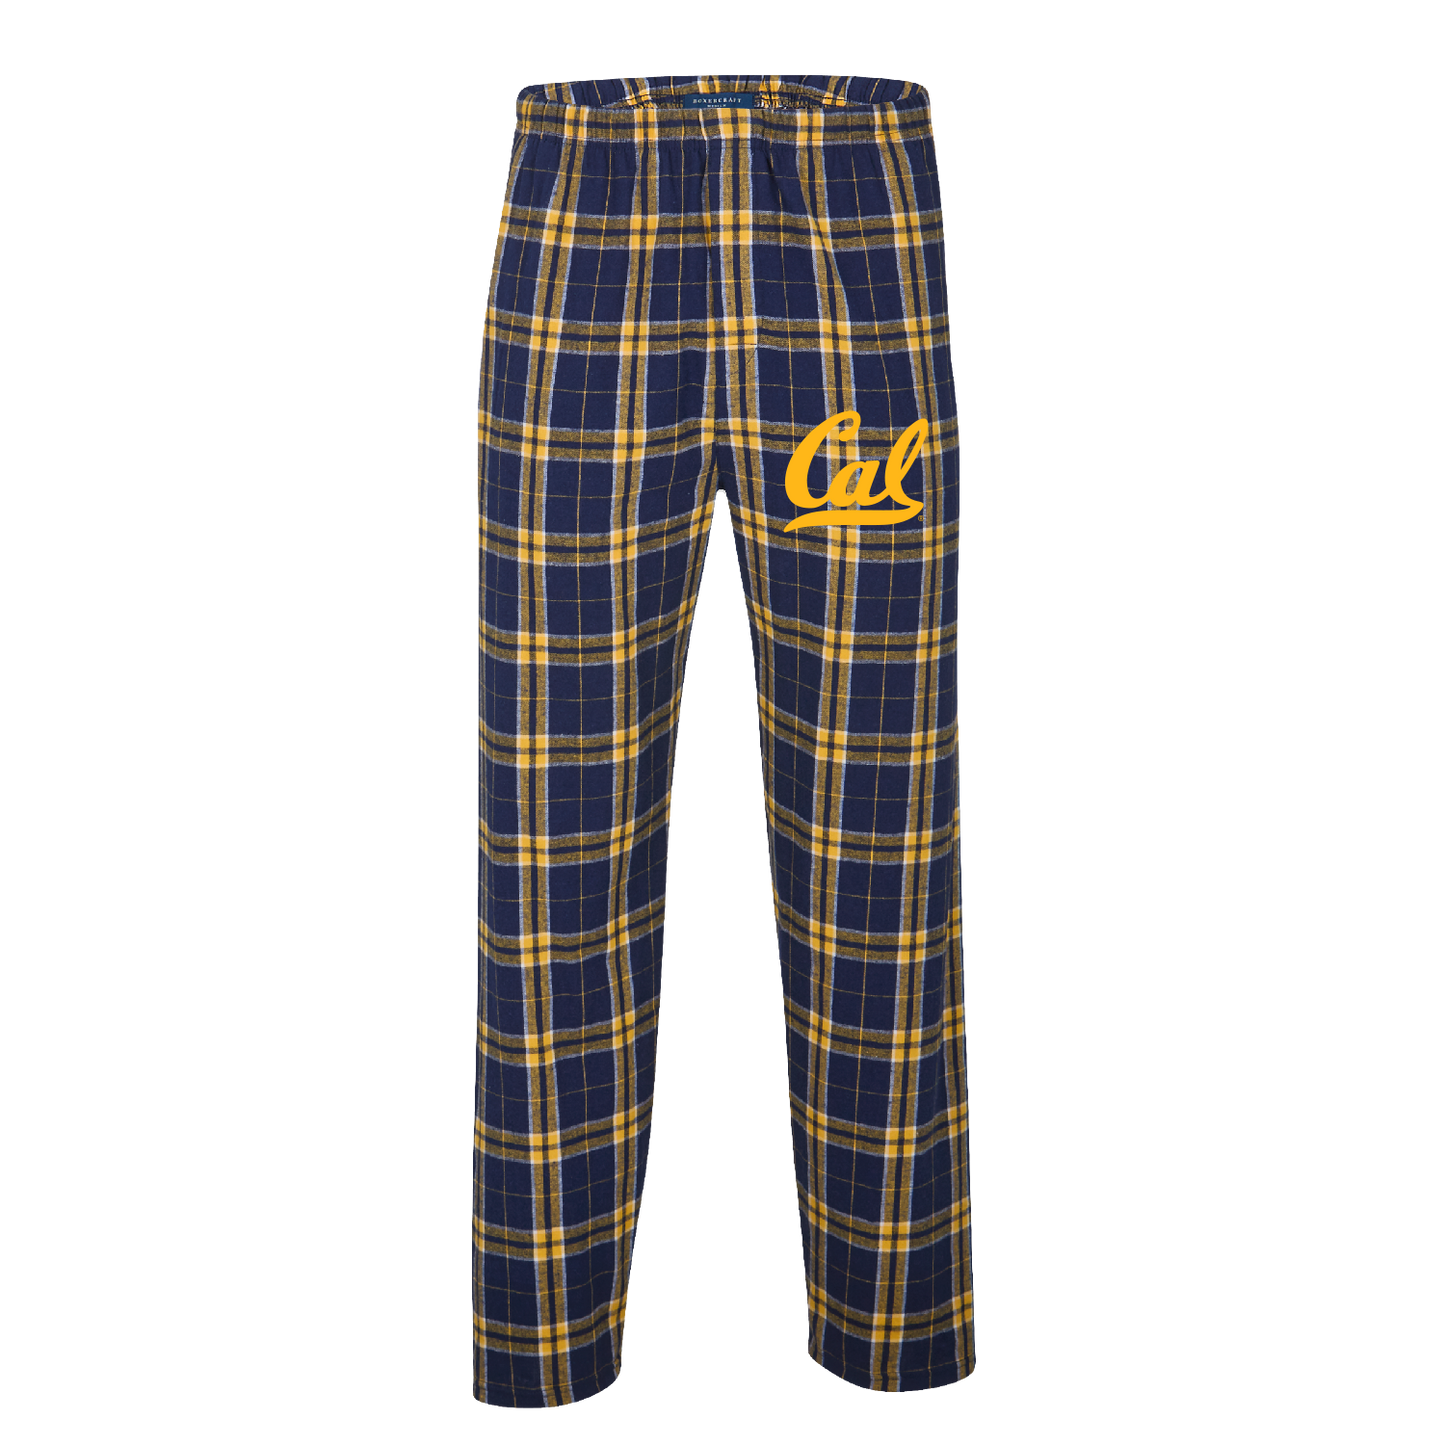 U.C. Berkeley Script Cal one colors men's flannel pants-Navy-Shop College Wear